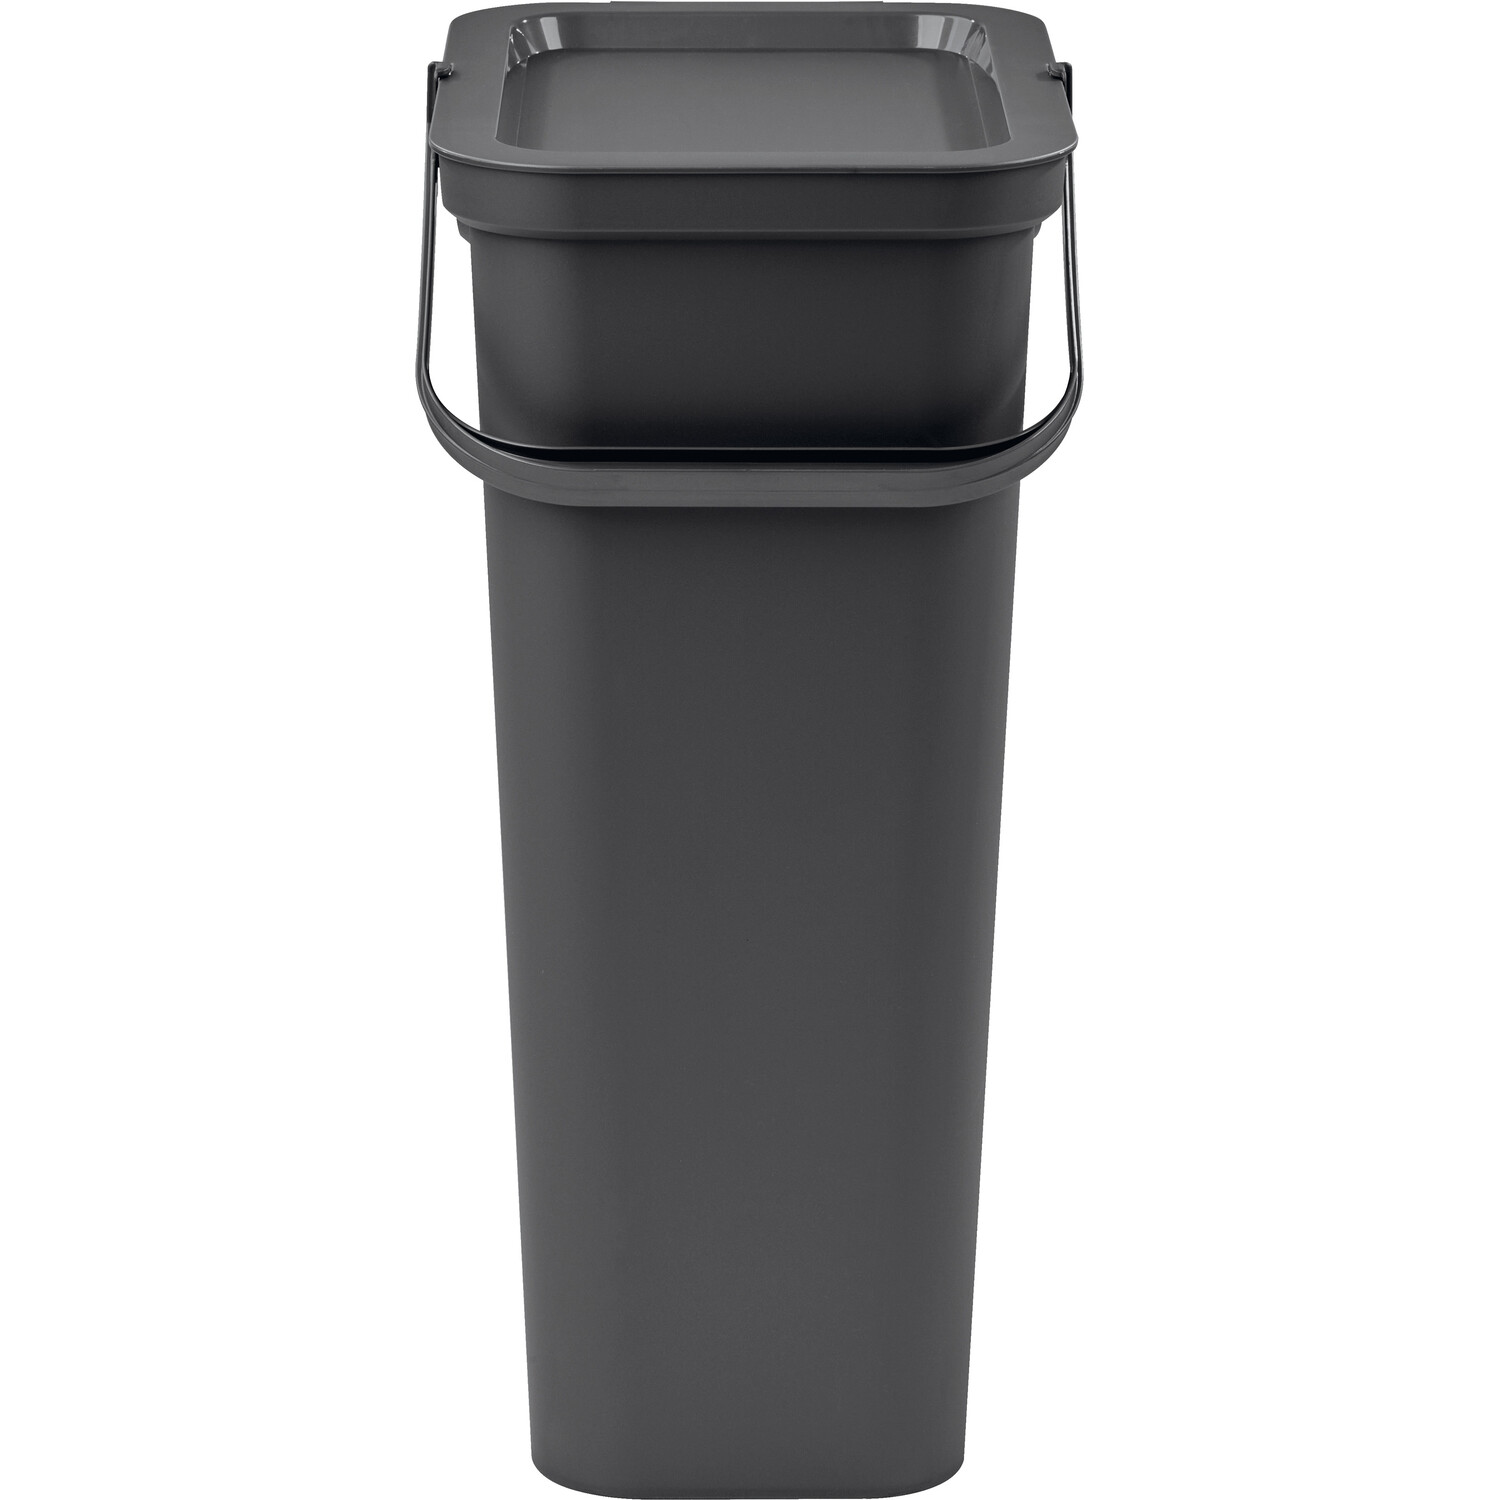 Tontarelli Moda Black Recycling Bin 40L Image